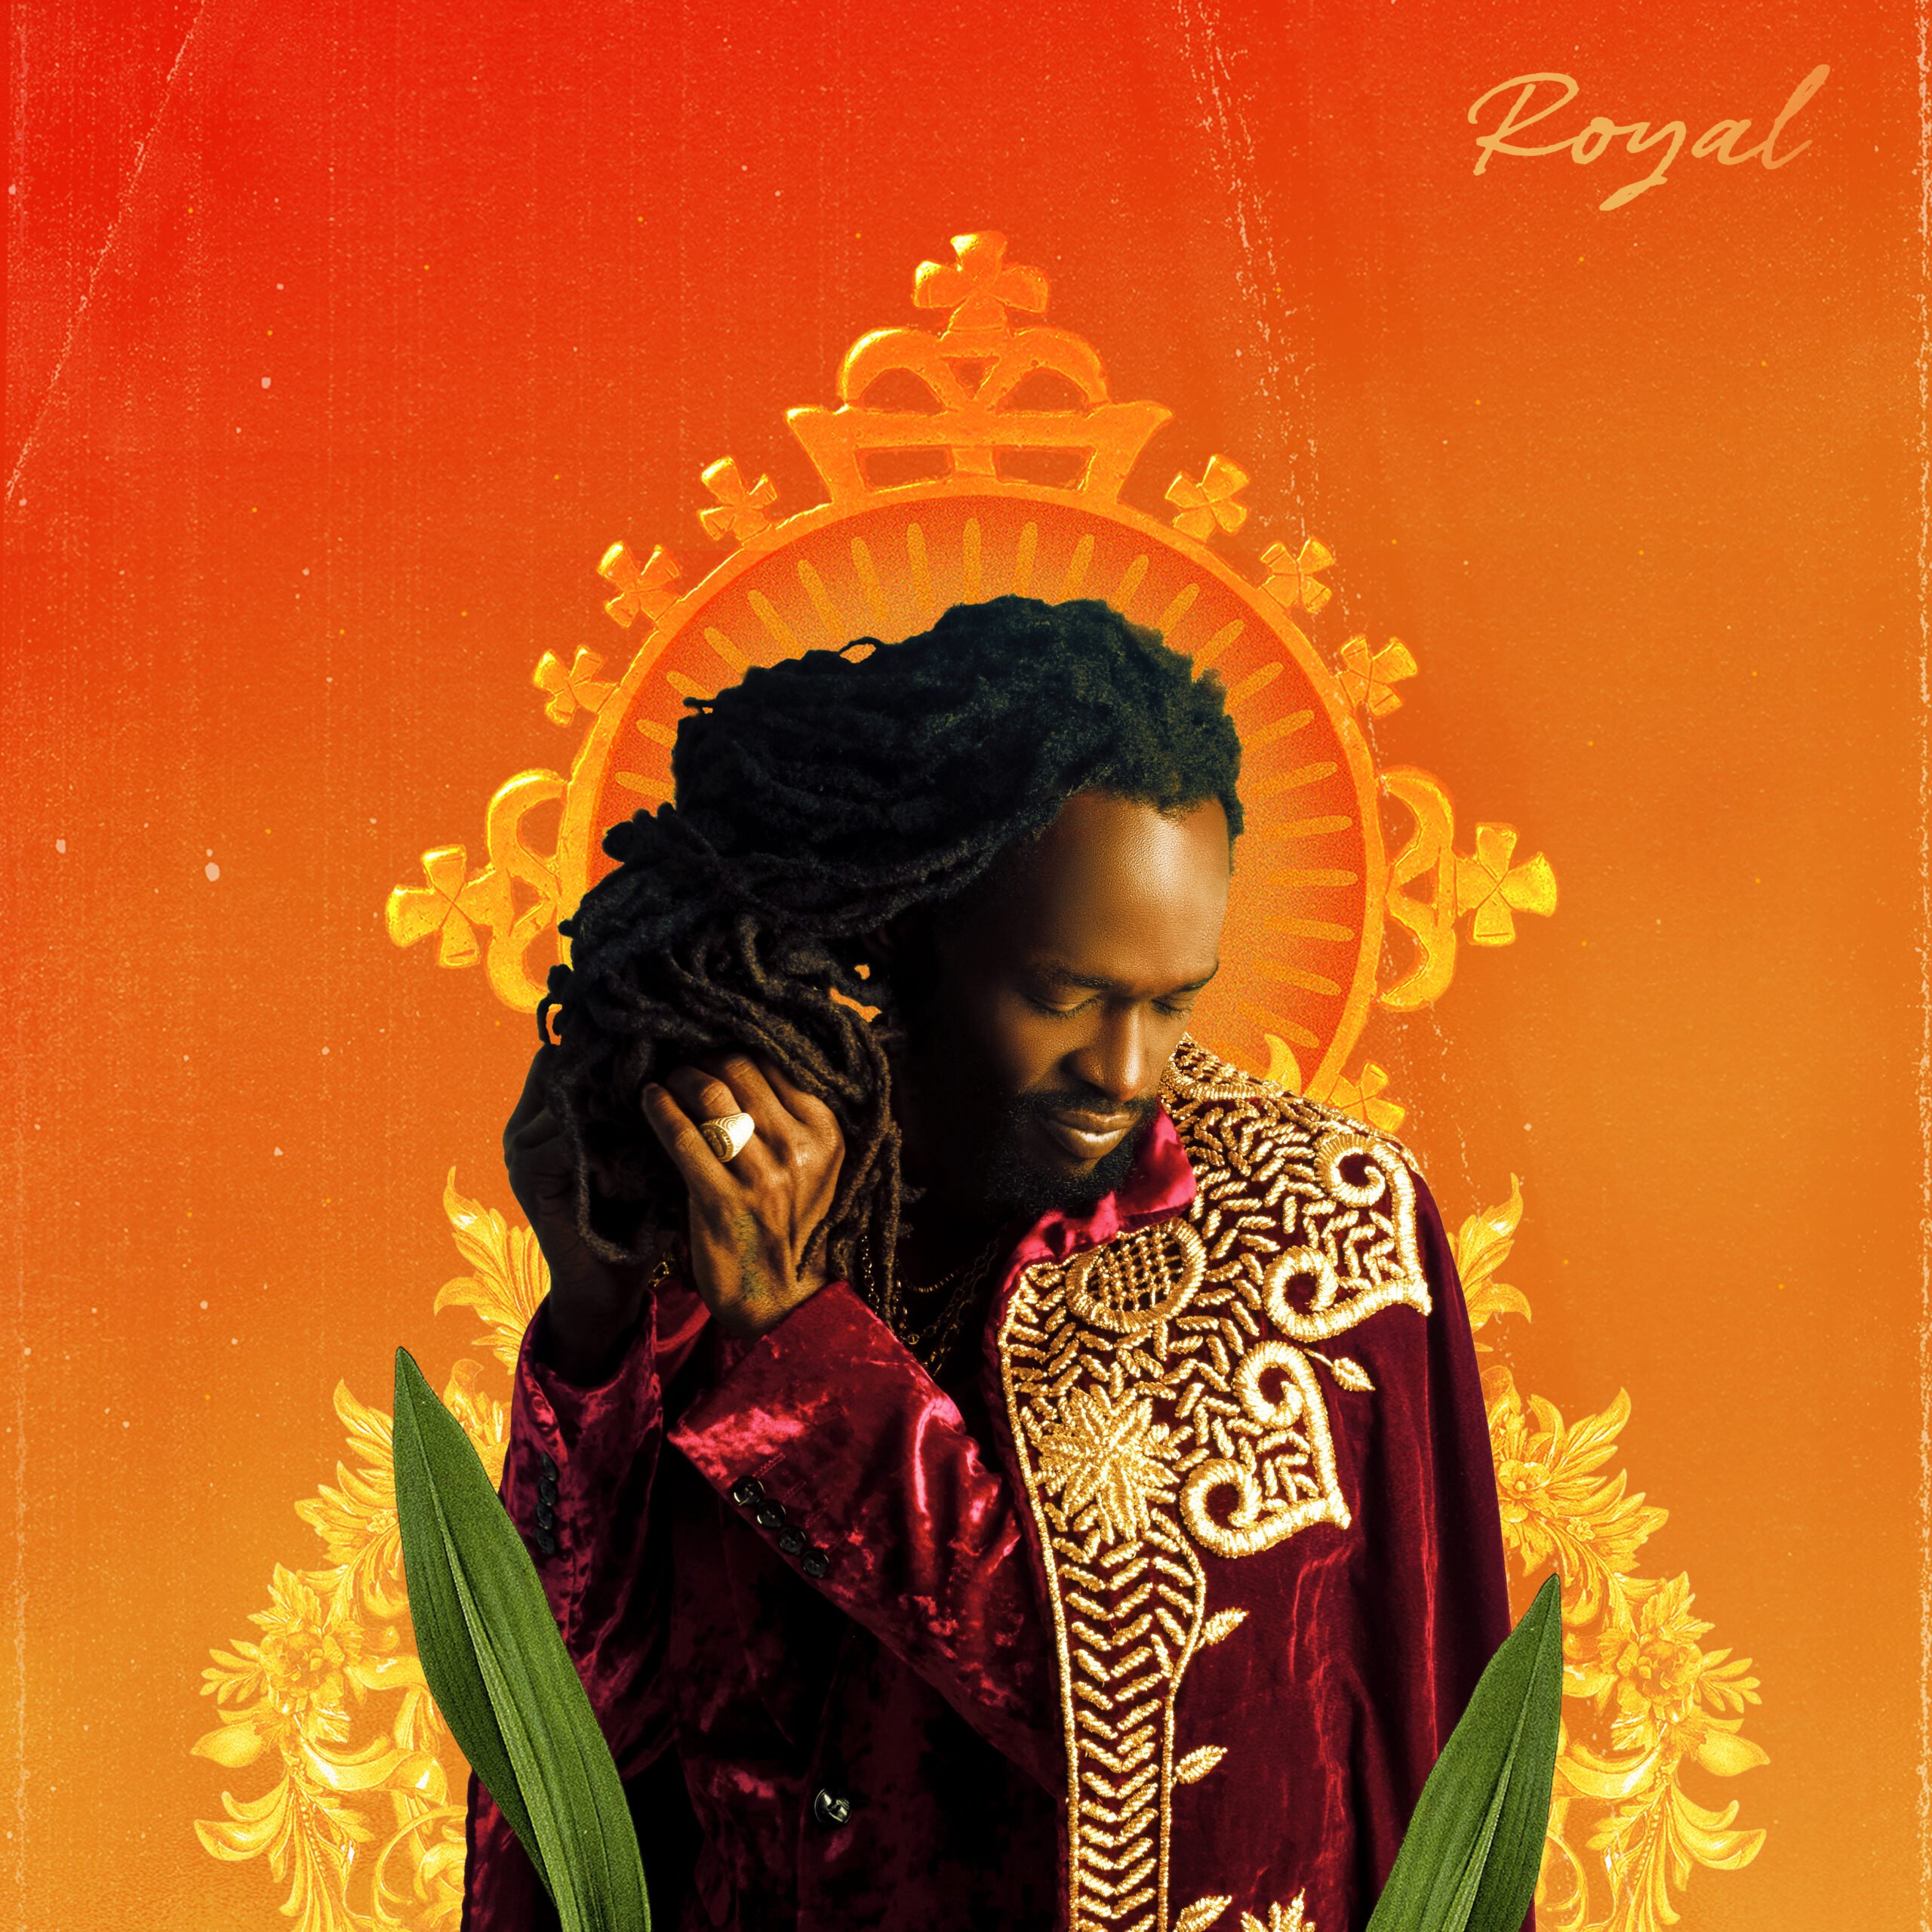 Cover Album Royal via Easy Star Records for use by 360 Magazine